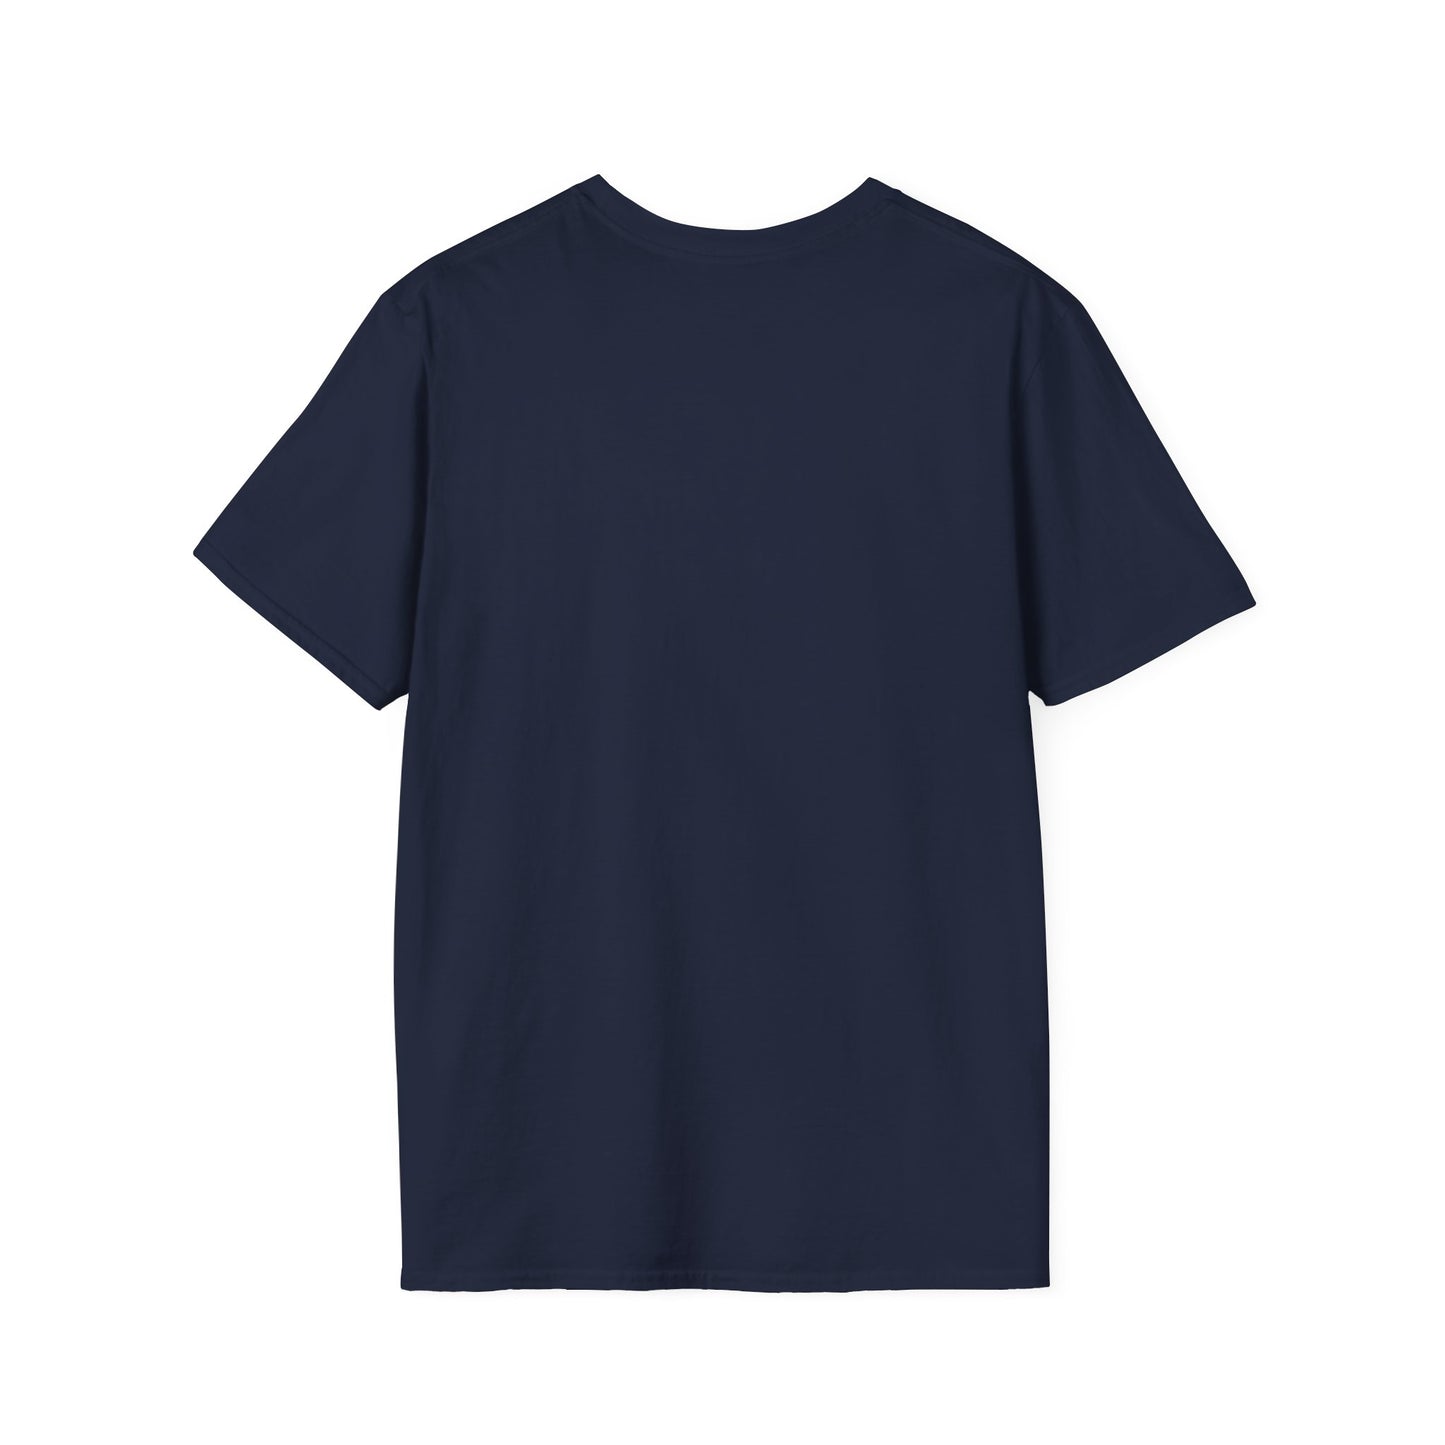 softball/baseball shirt UNISEX (softstyle)